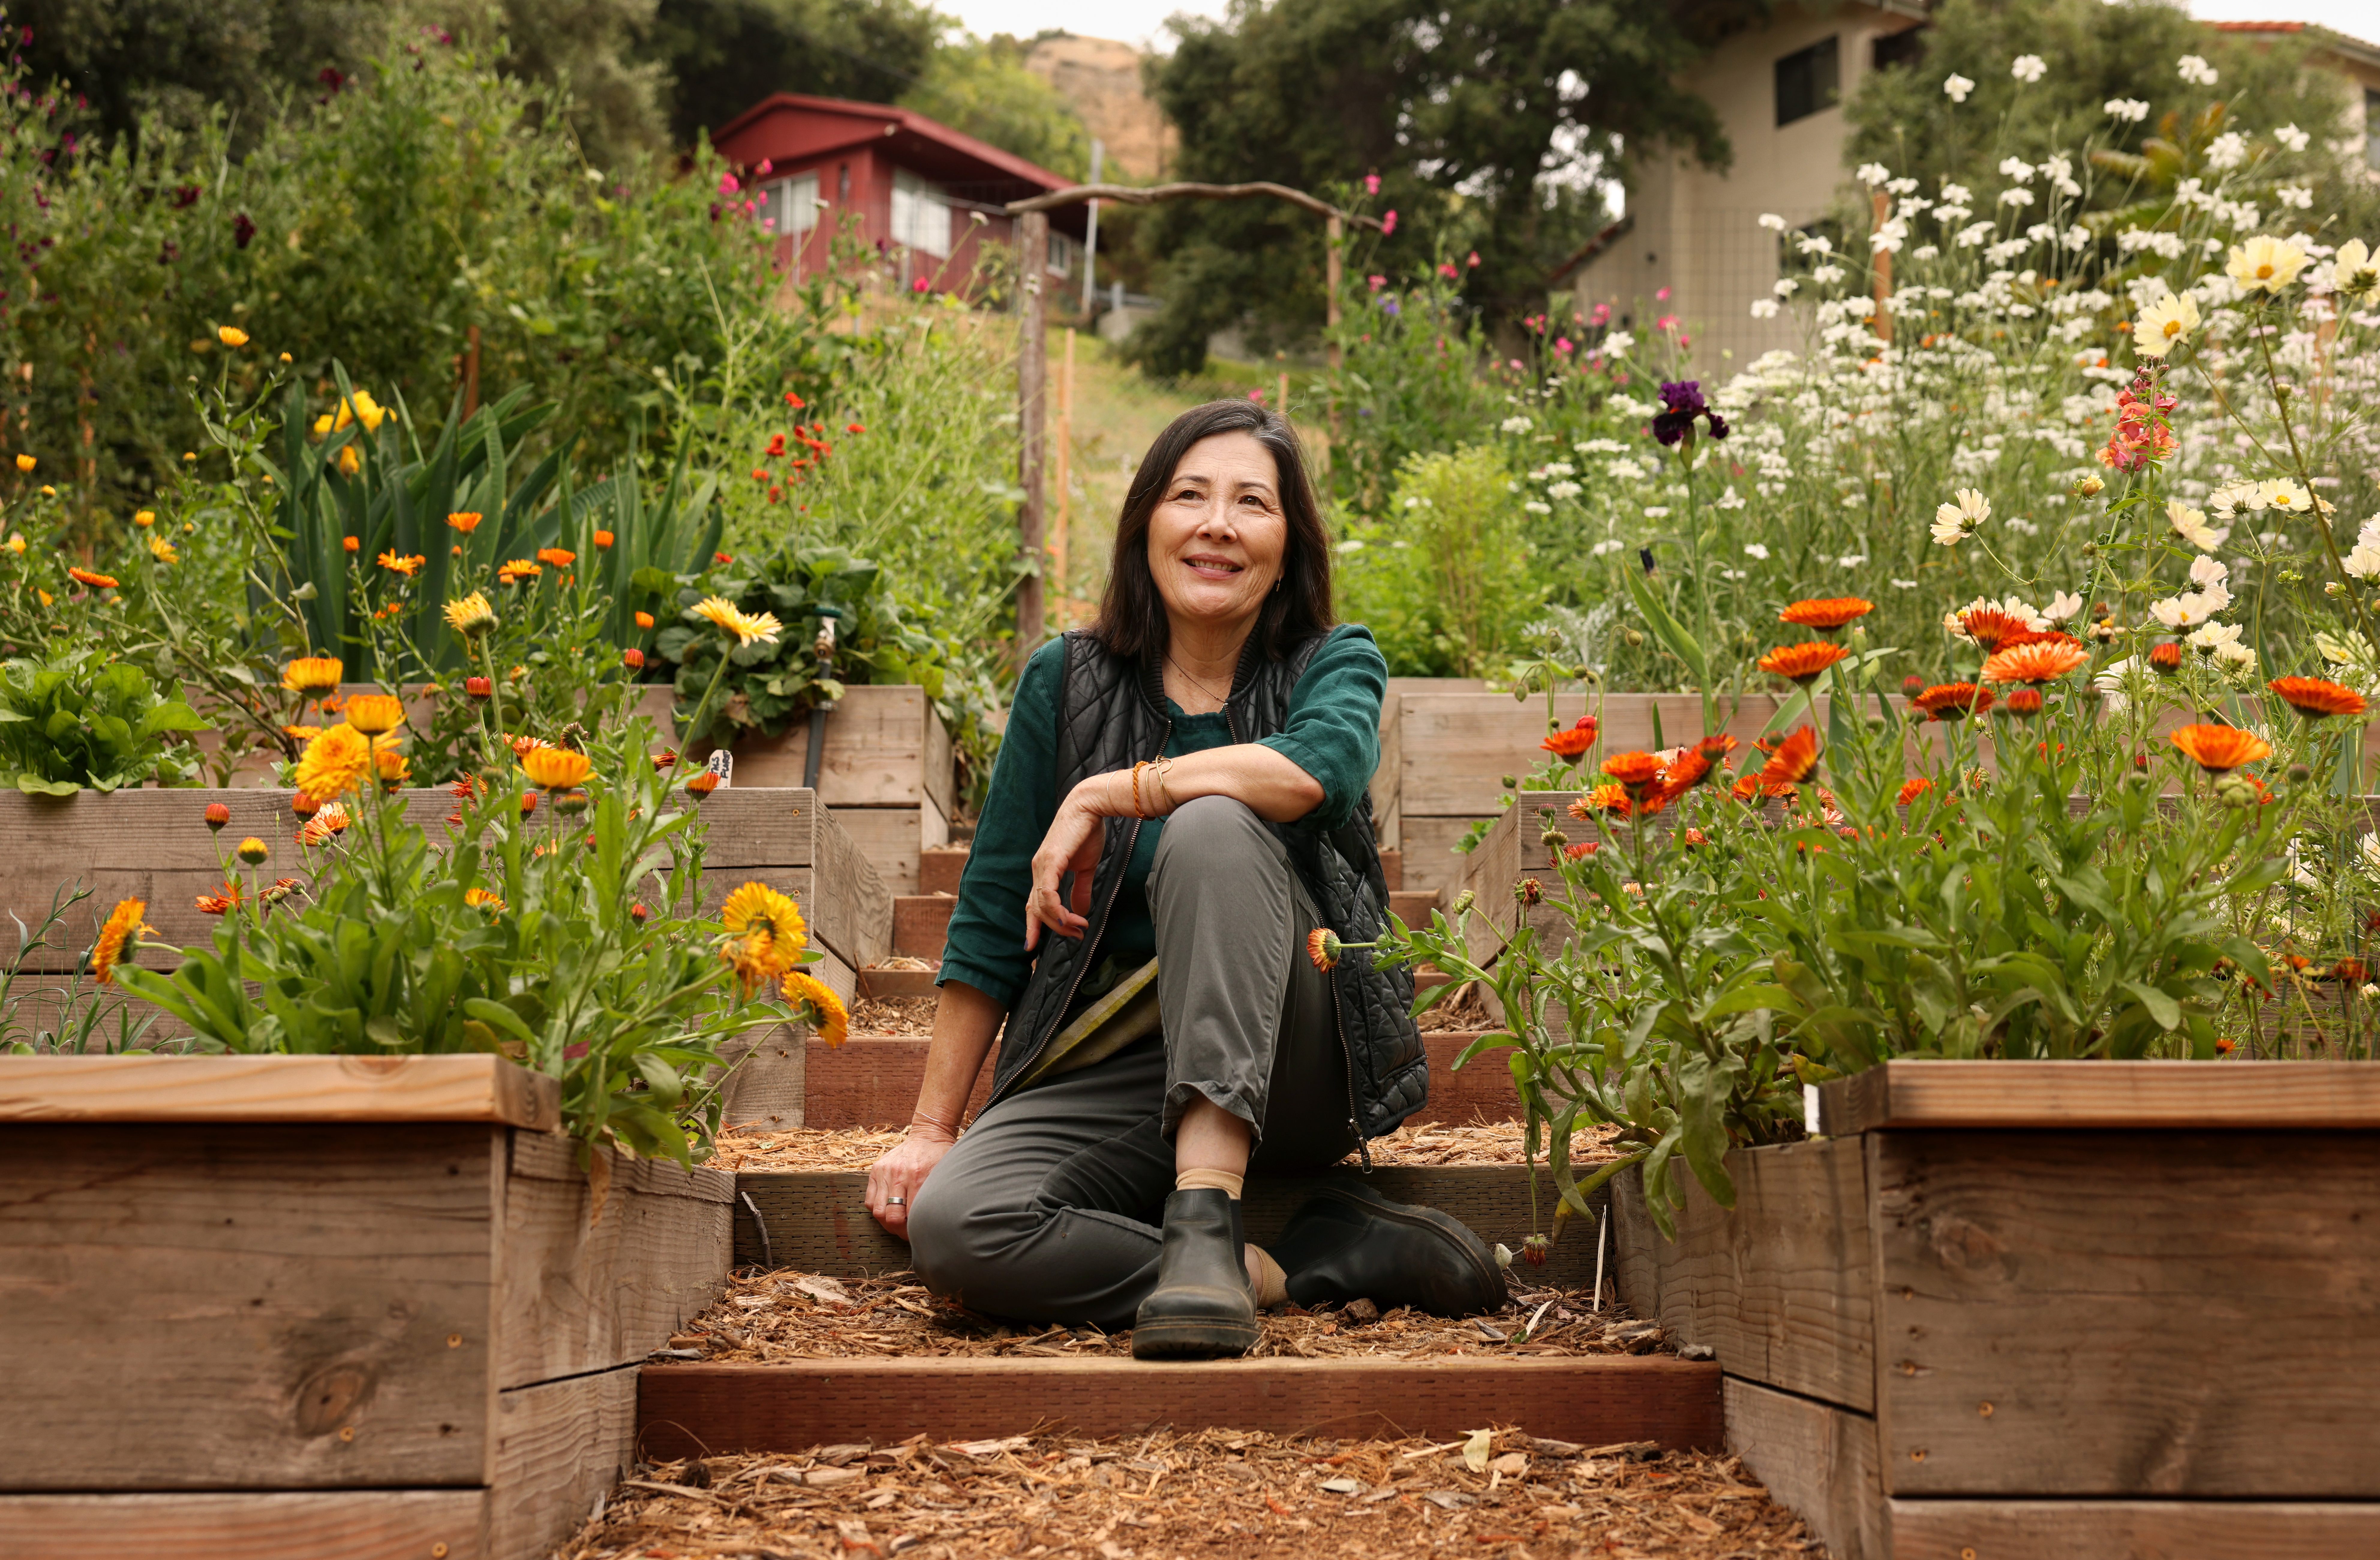 L.A. landscape designer Kathleen Ferguson sits surrounded by flowers in wooden planter boxes